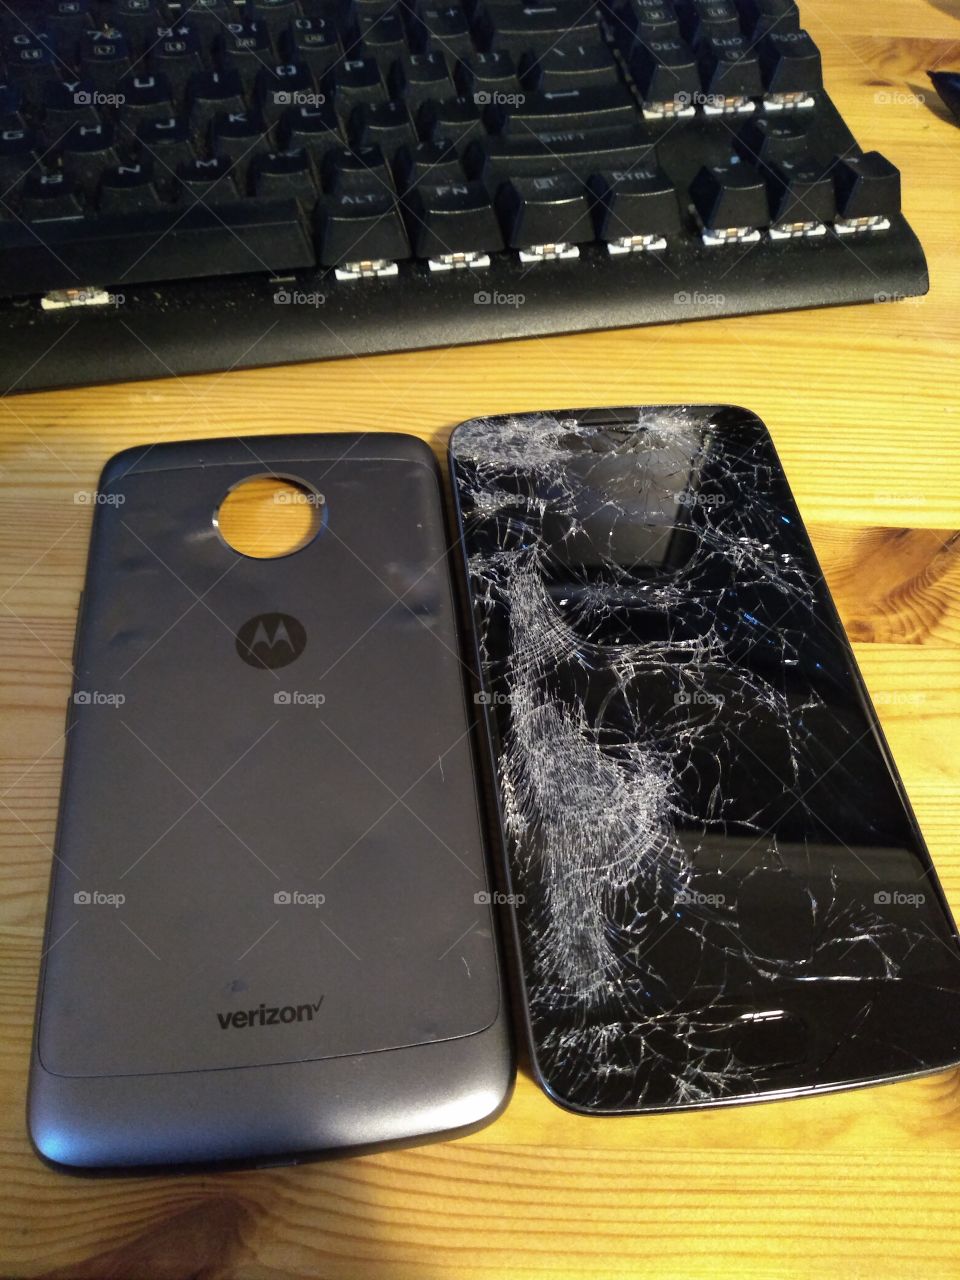 A damaged Motorola cellphone, run over by a car.